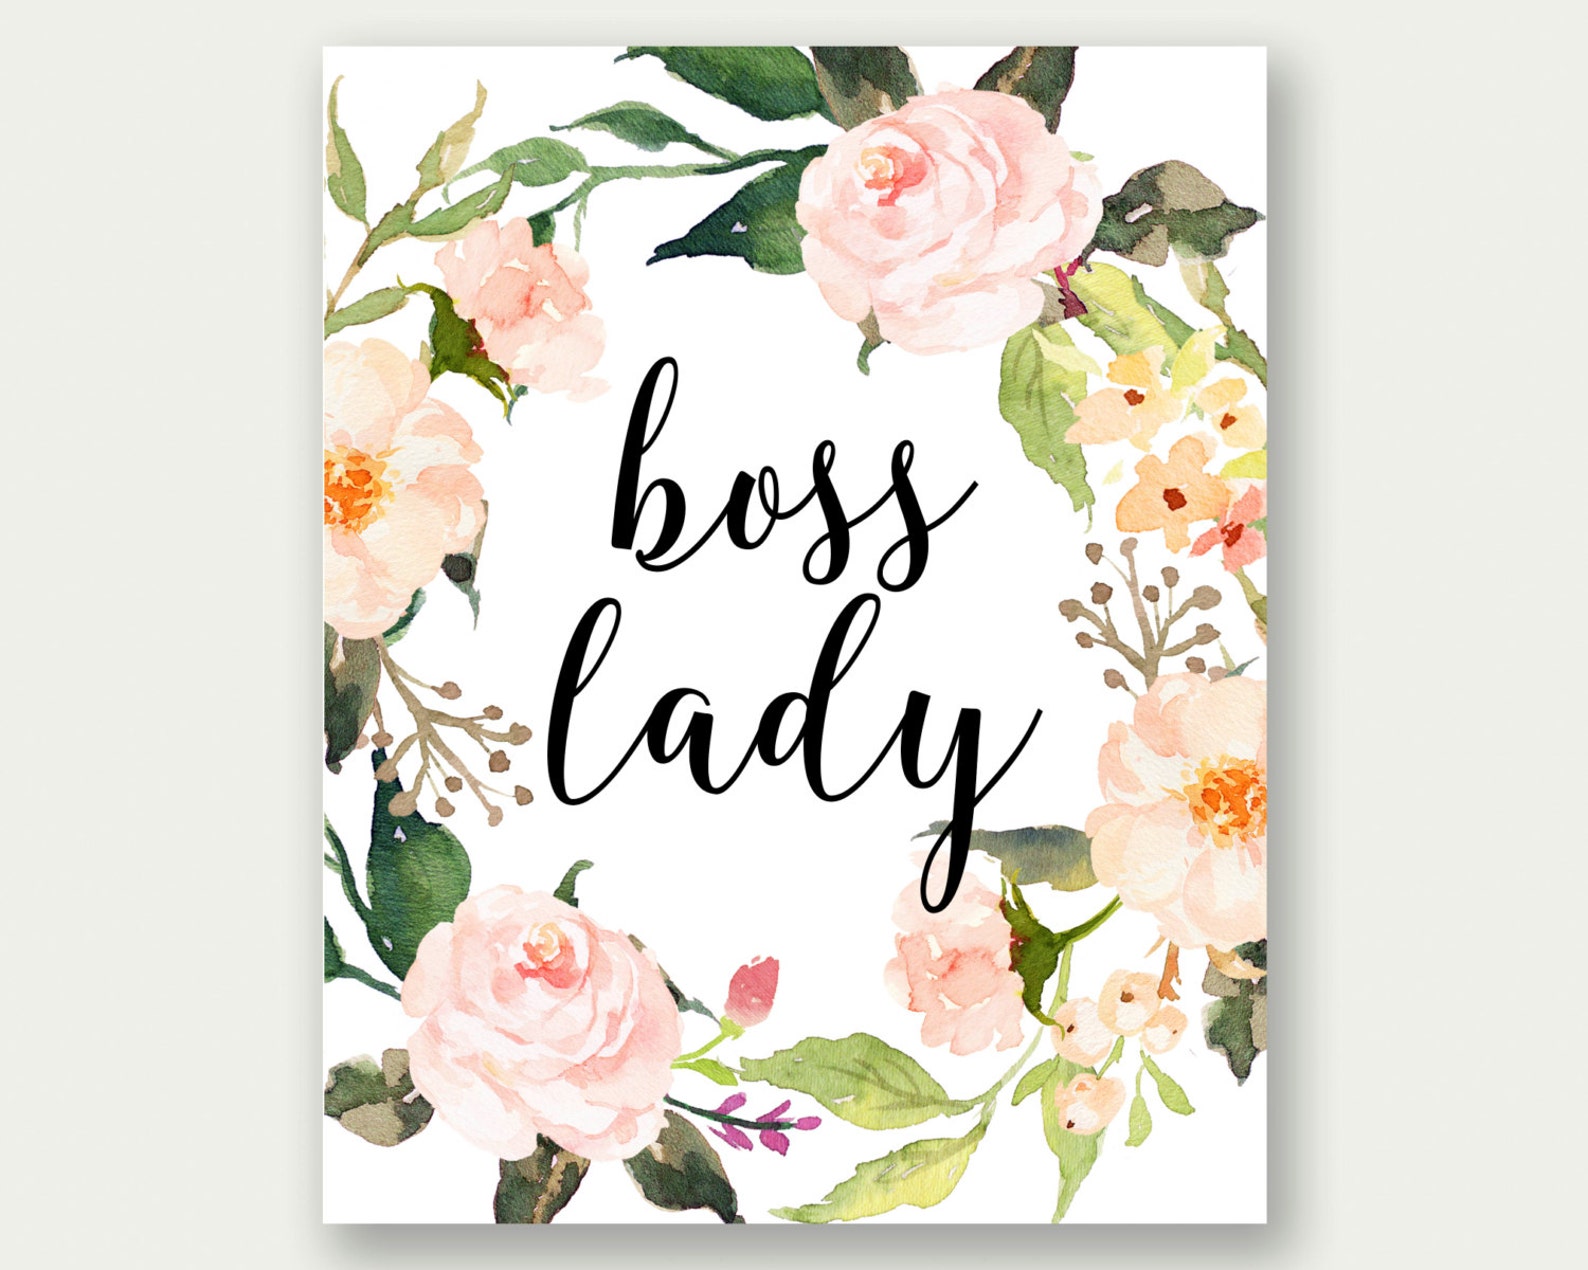 Lady boss is. Леди босс открытка. С днем рождения леди босс. С днем рождения лкдибосс. Надпись леди.